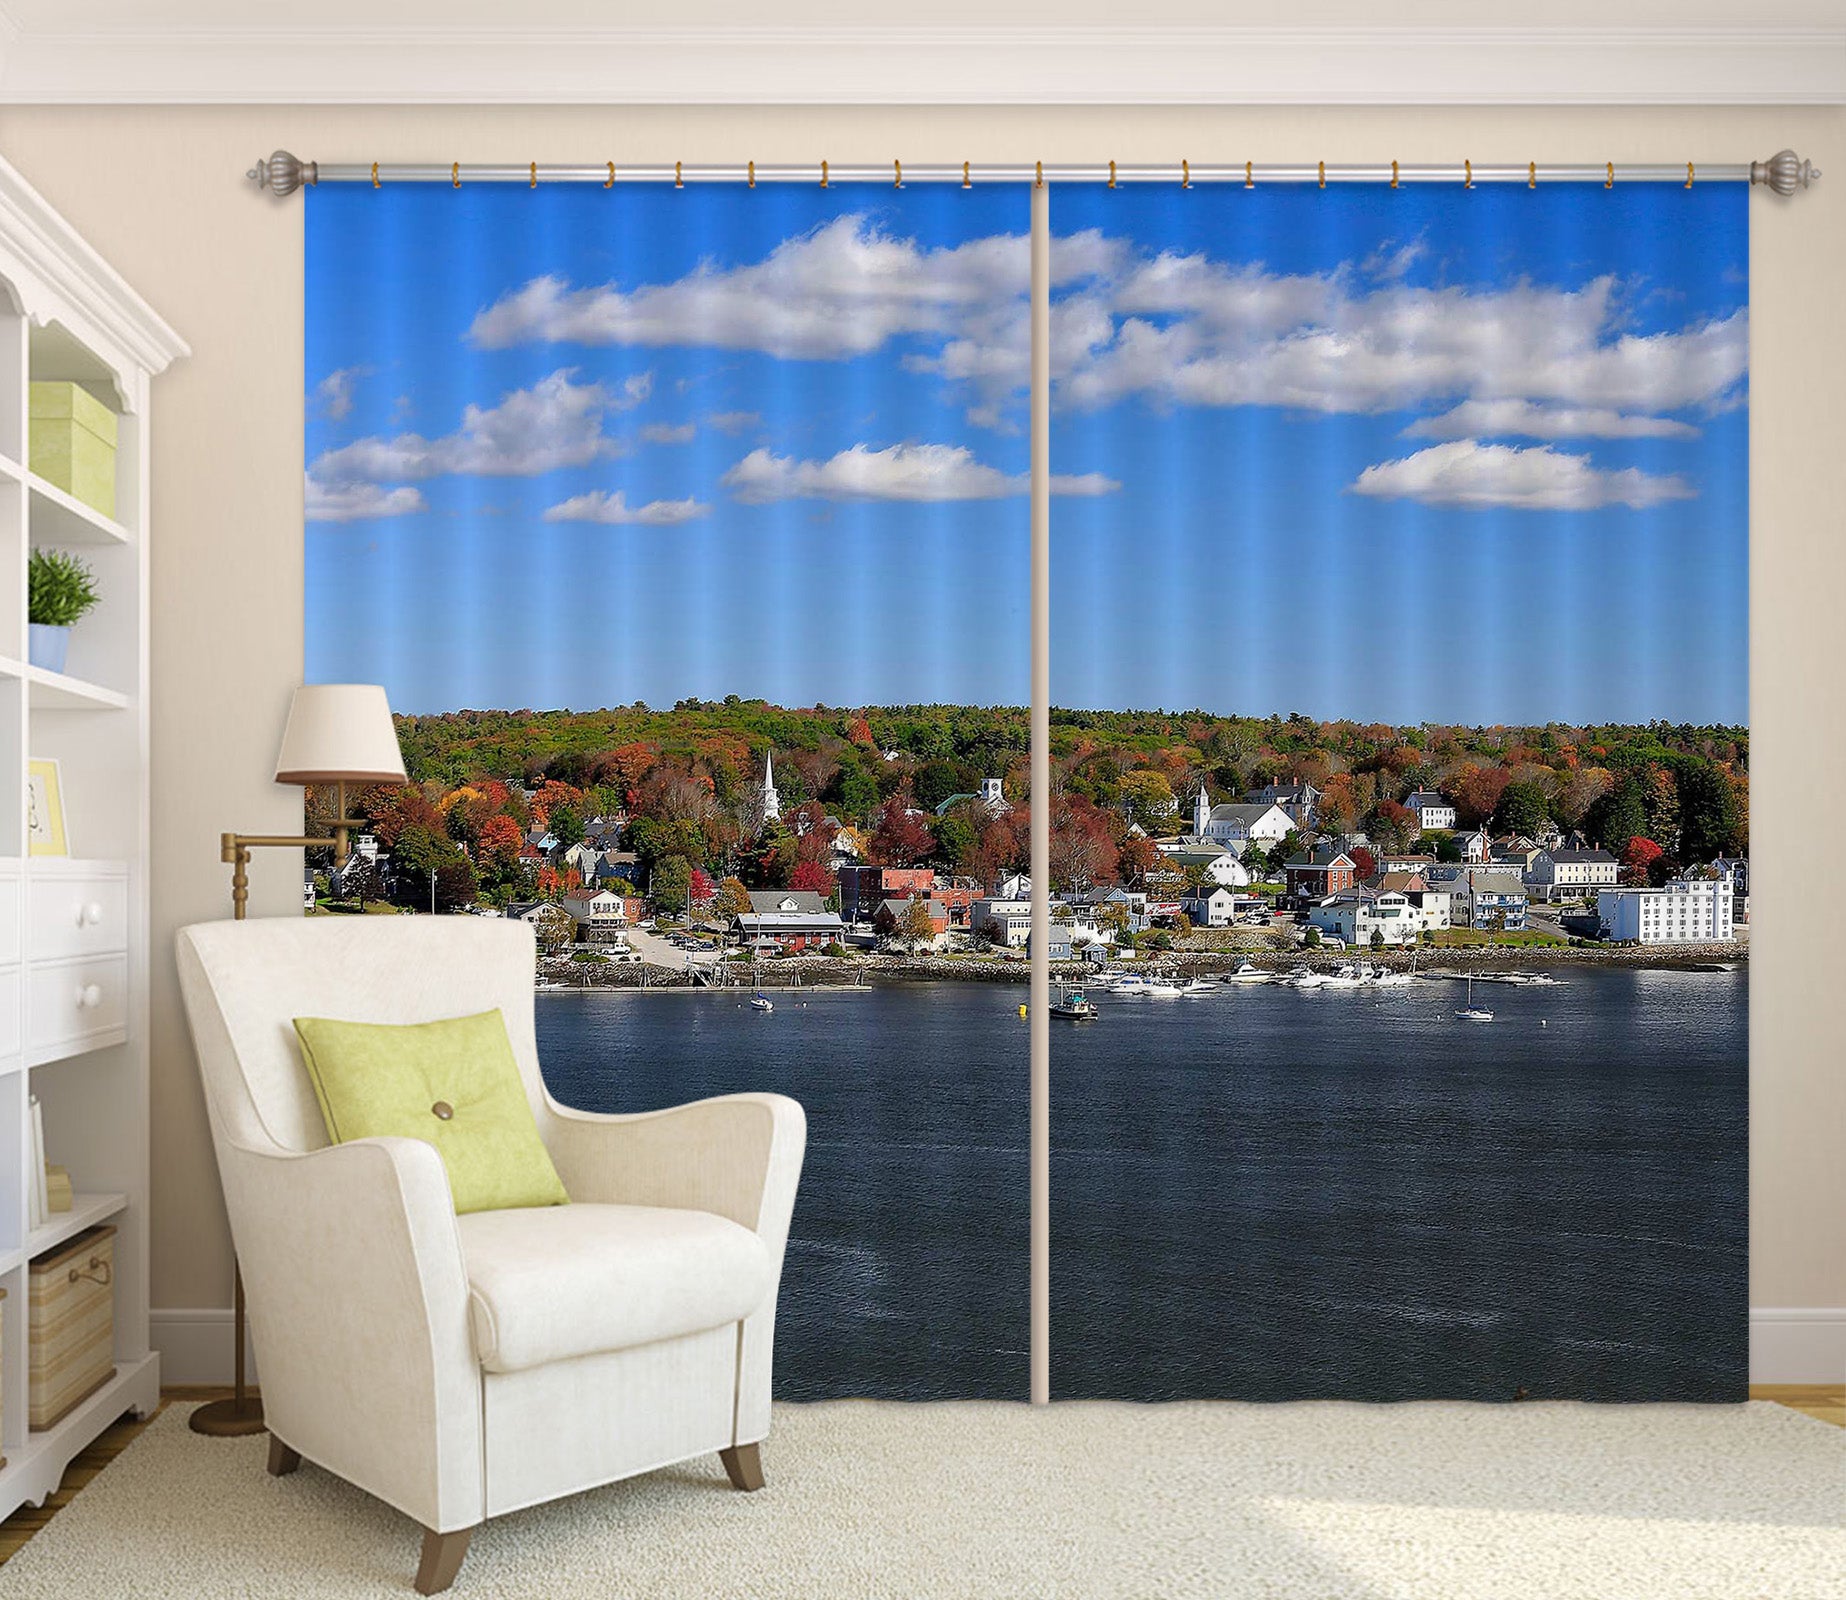 3D Seaside House 61211 Kathy Barefield Curtain Curtains Drapes